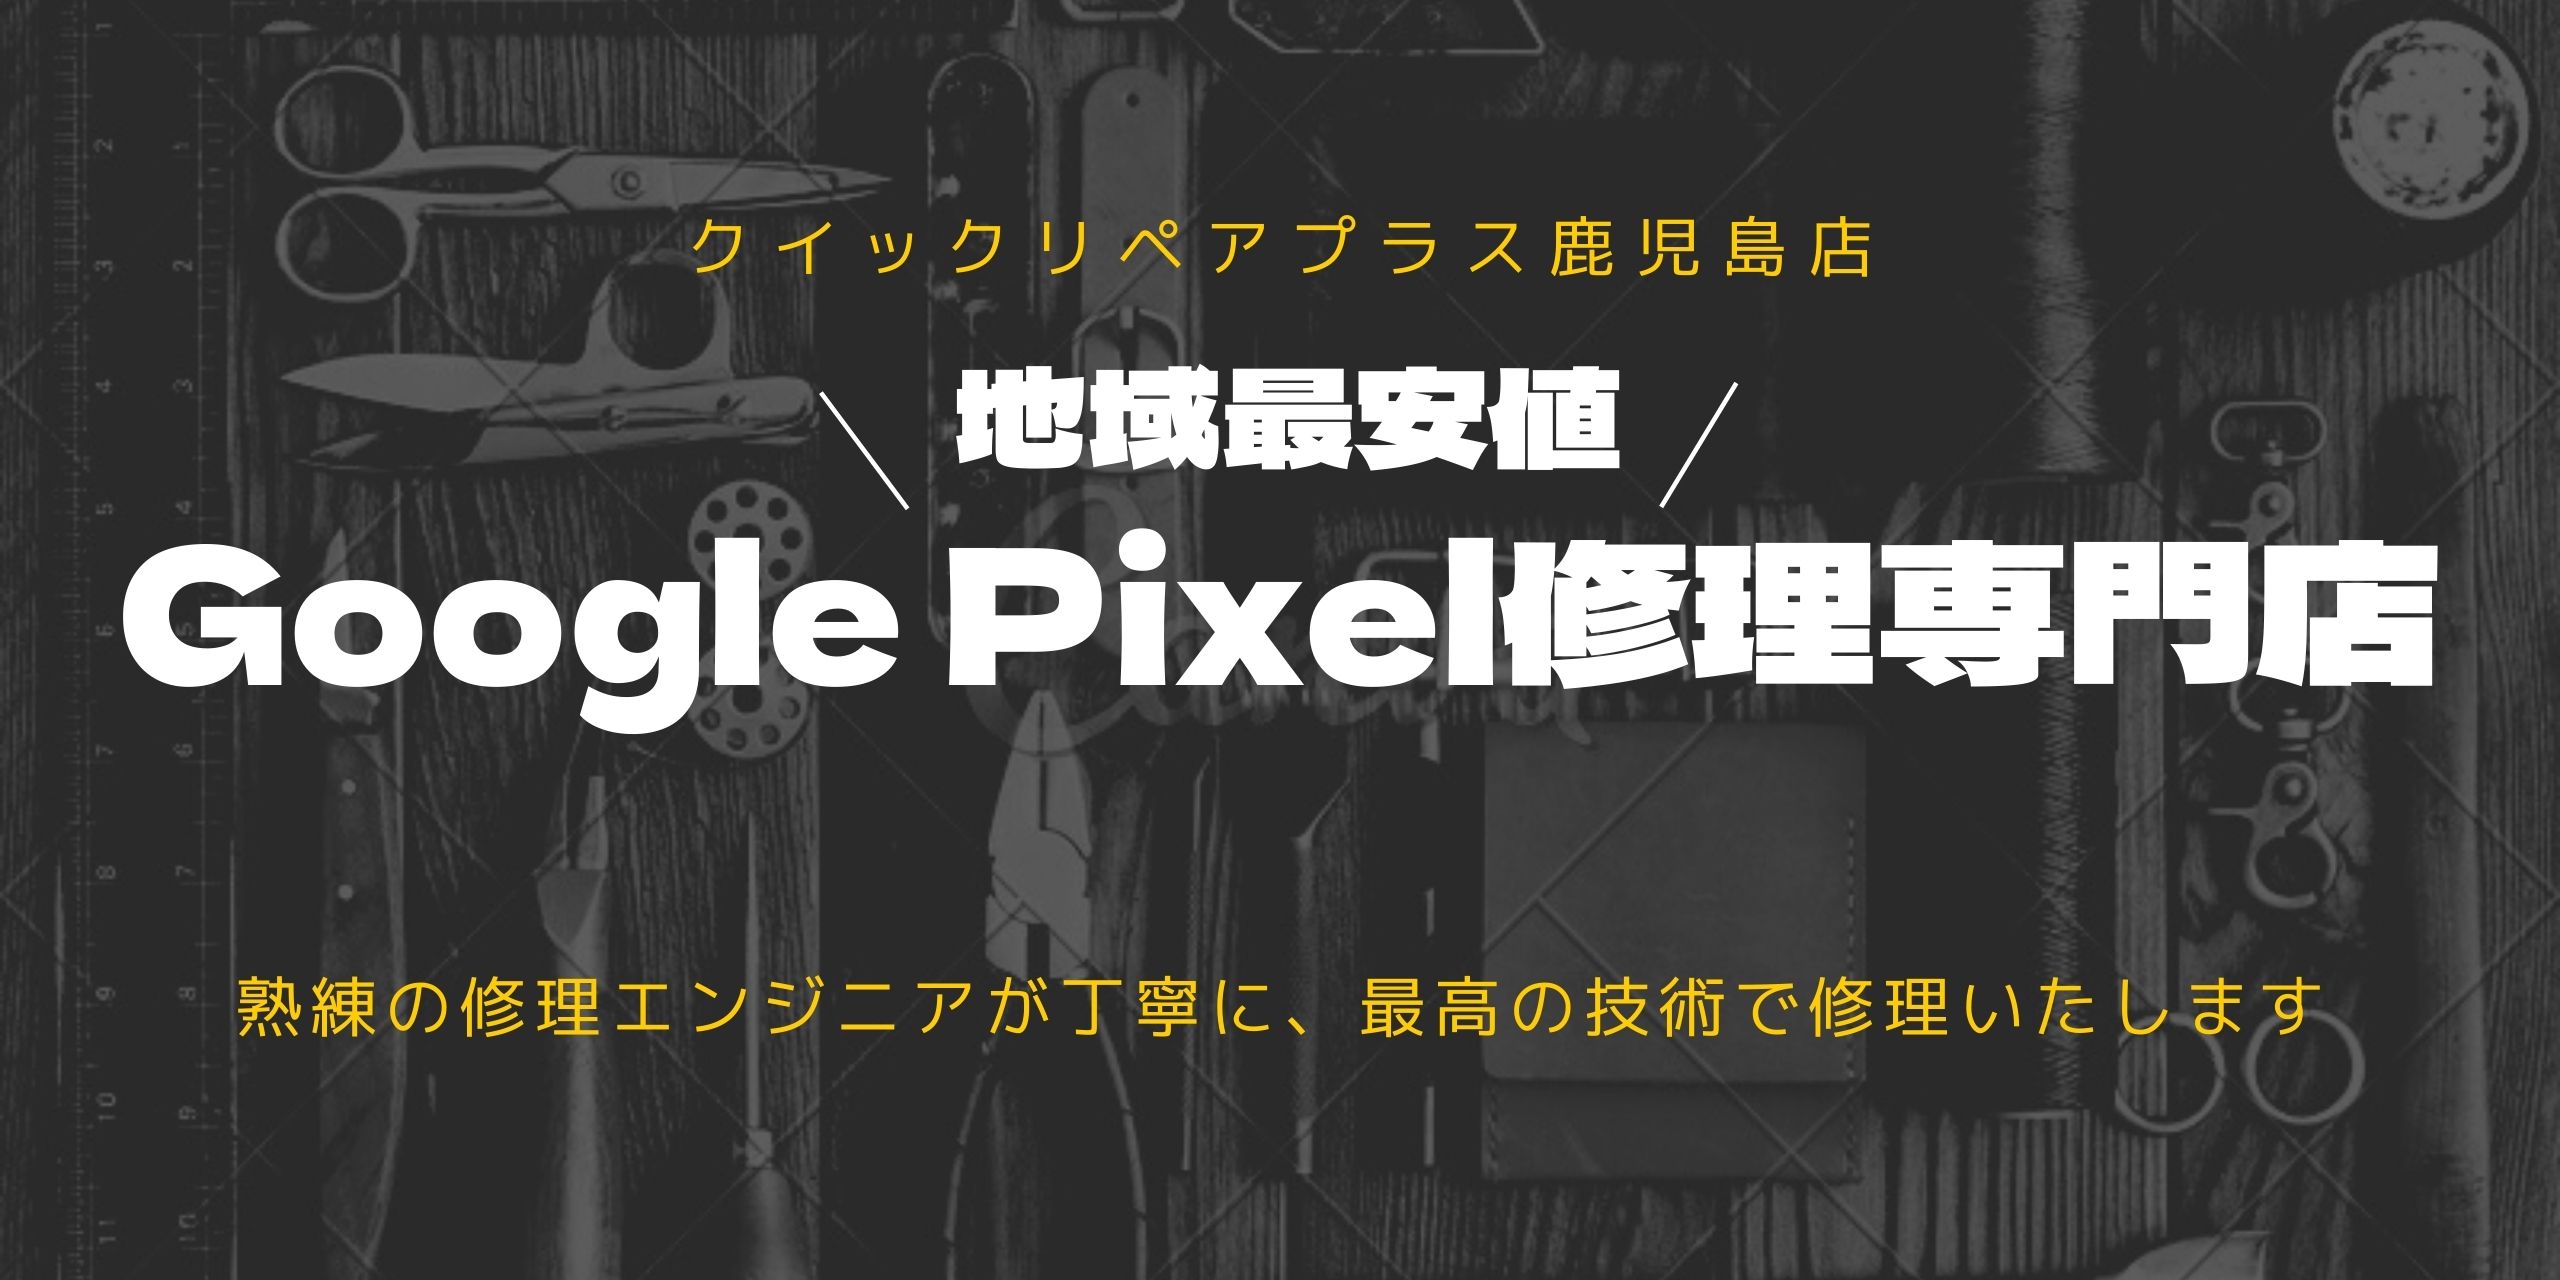 <span class="dojodigital_toggle_title">Google Pixel修理をするならクイックリペアプラス鹿児島店</span>